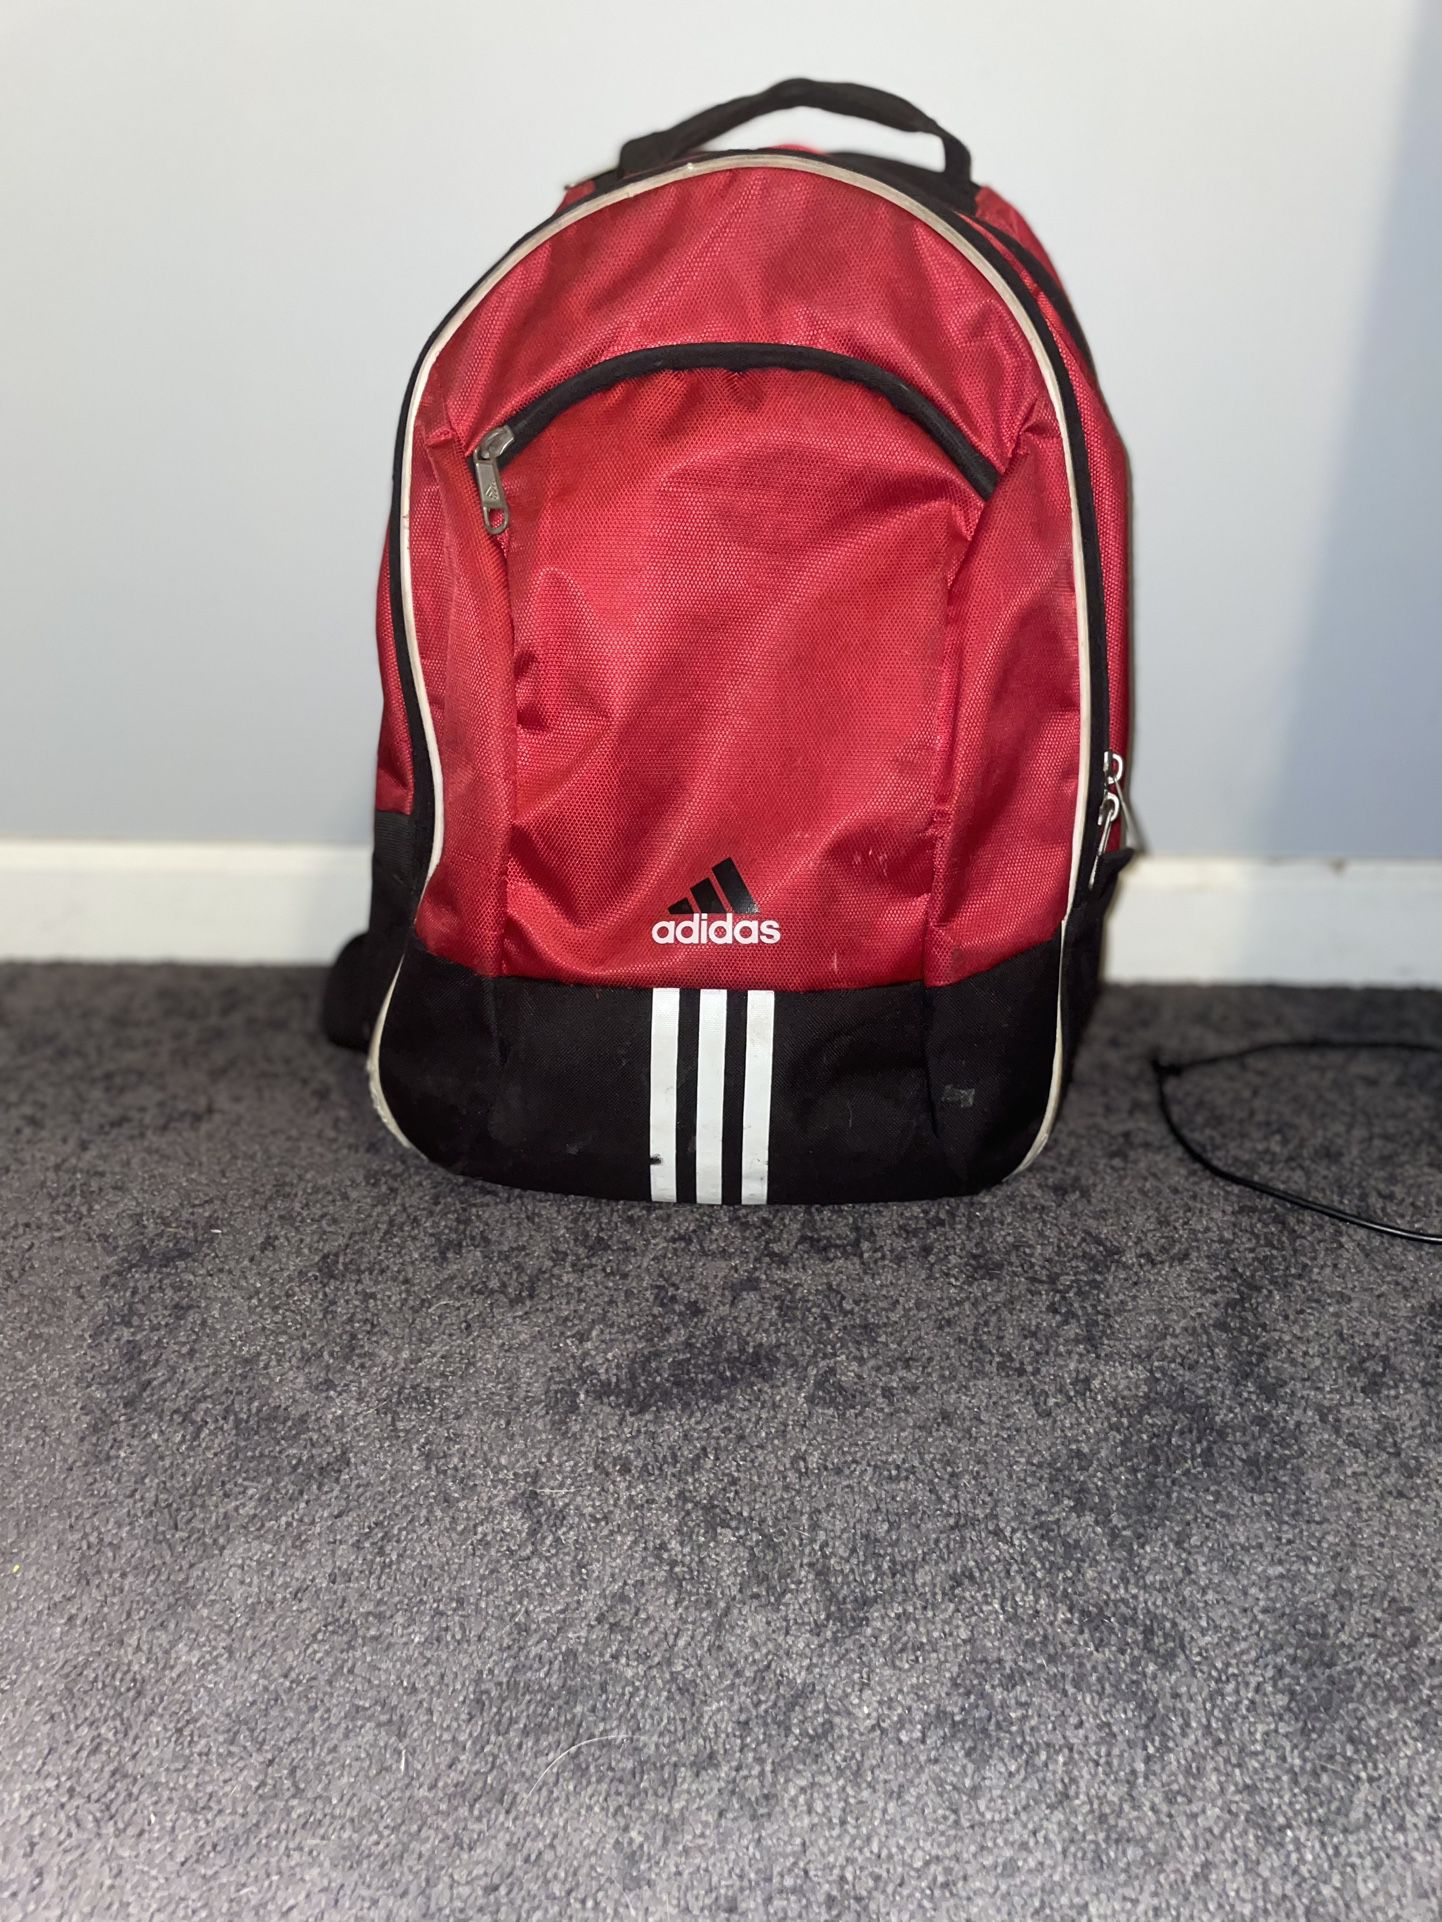 Echt Verloren hart kaping Red Adidas Backpack for Sale in Henrietta, NY - OfferUp